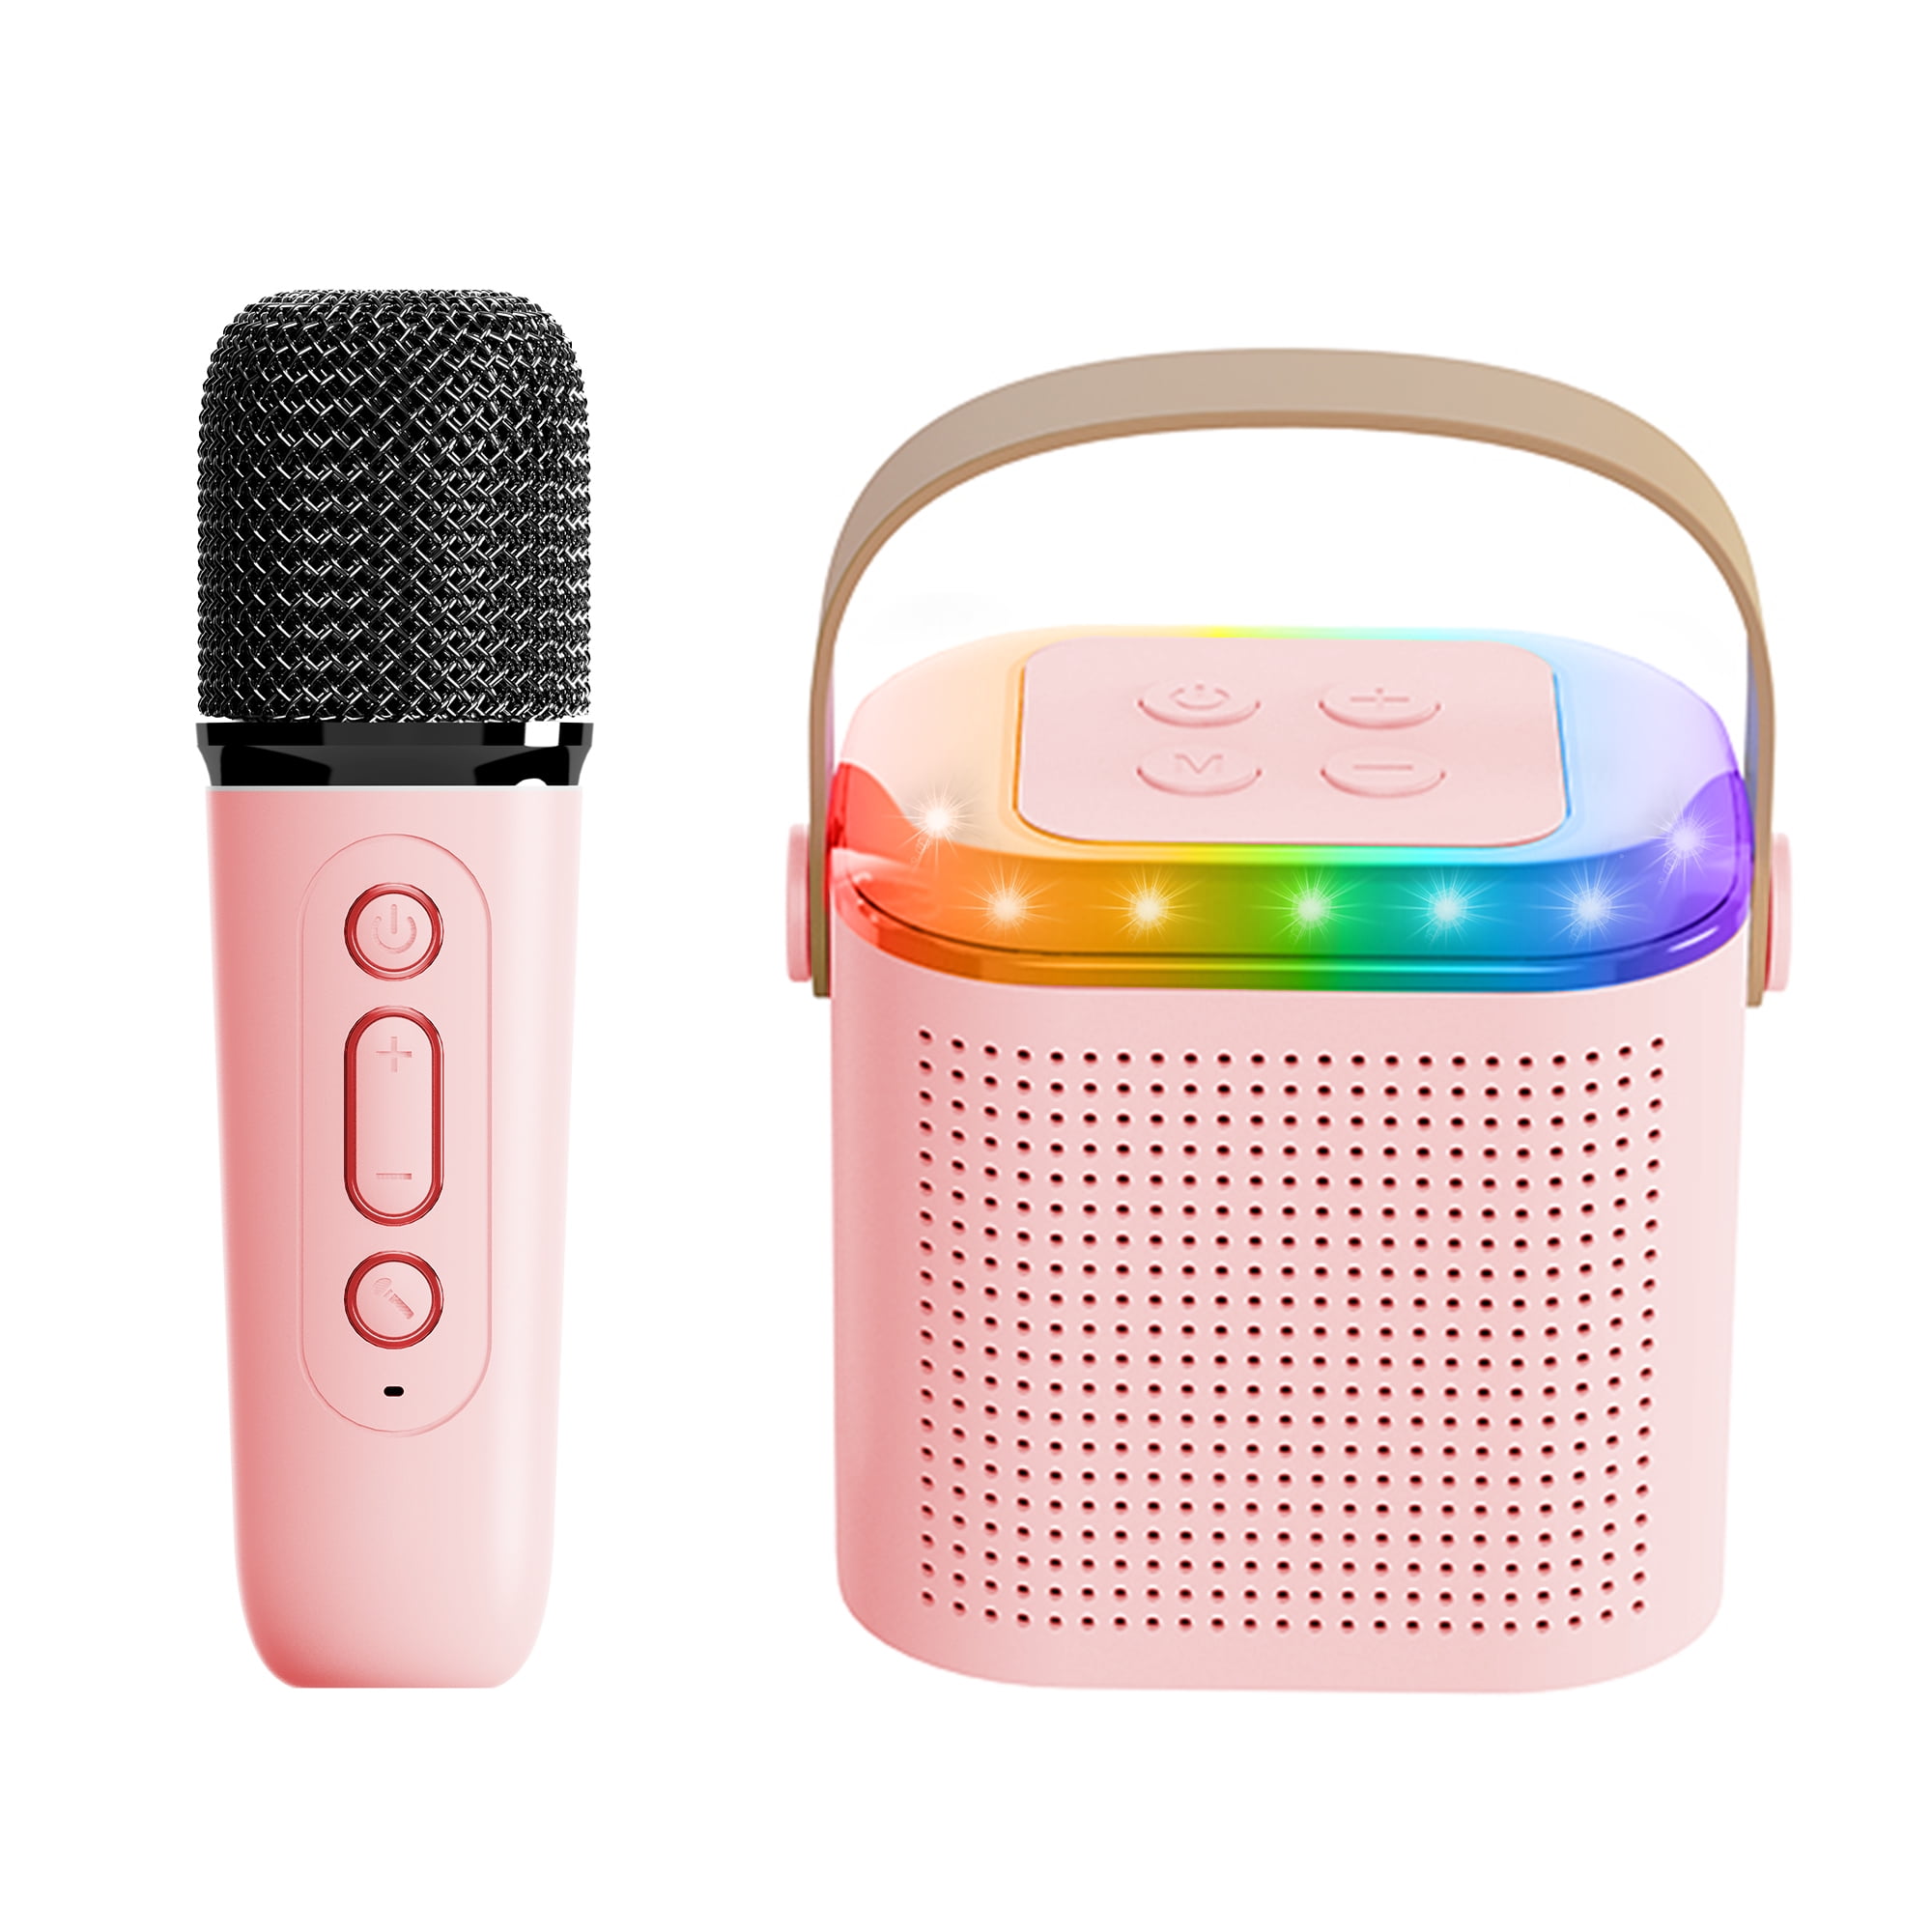 Adofi Upgraded Mini Karaoke Machine for Kids, Portable Bluetooth